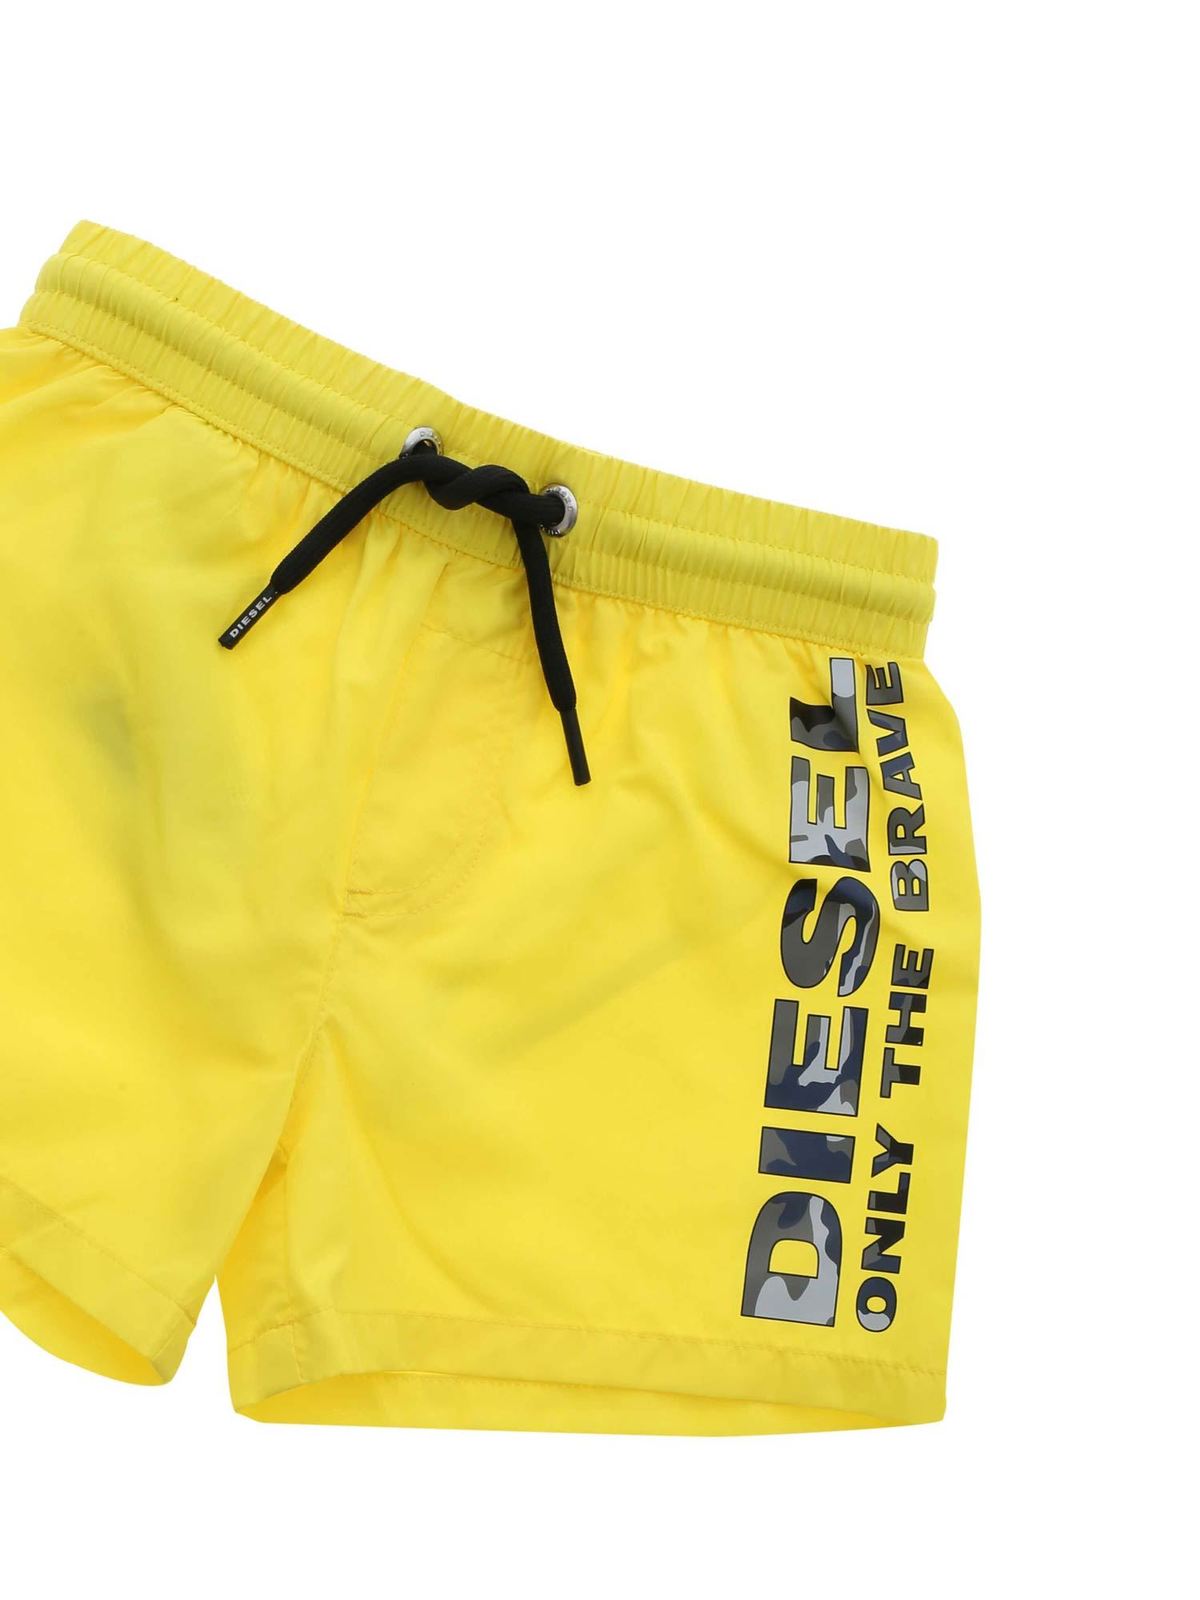 Swim shorts & swimming trunks Diesel - Mbxdorry swim short in yellow ...